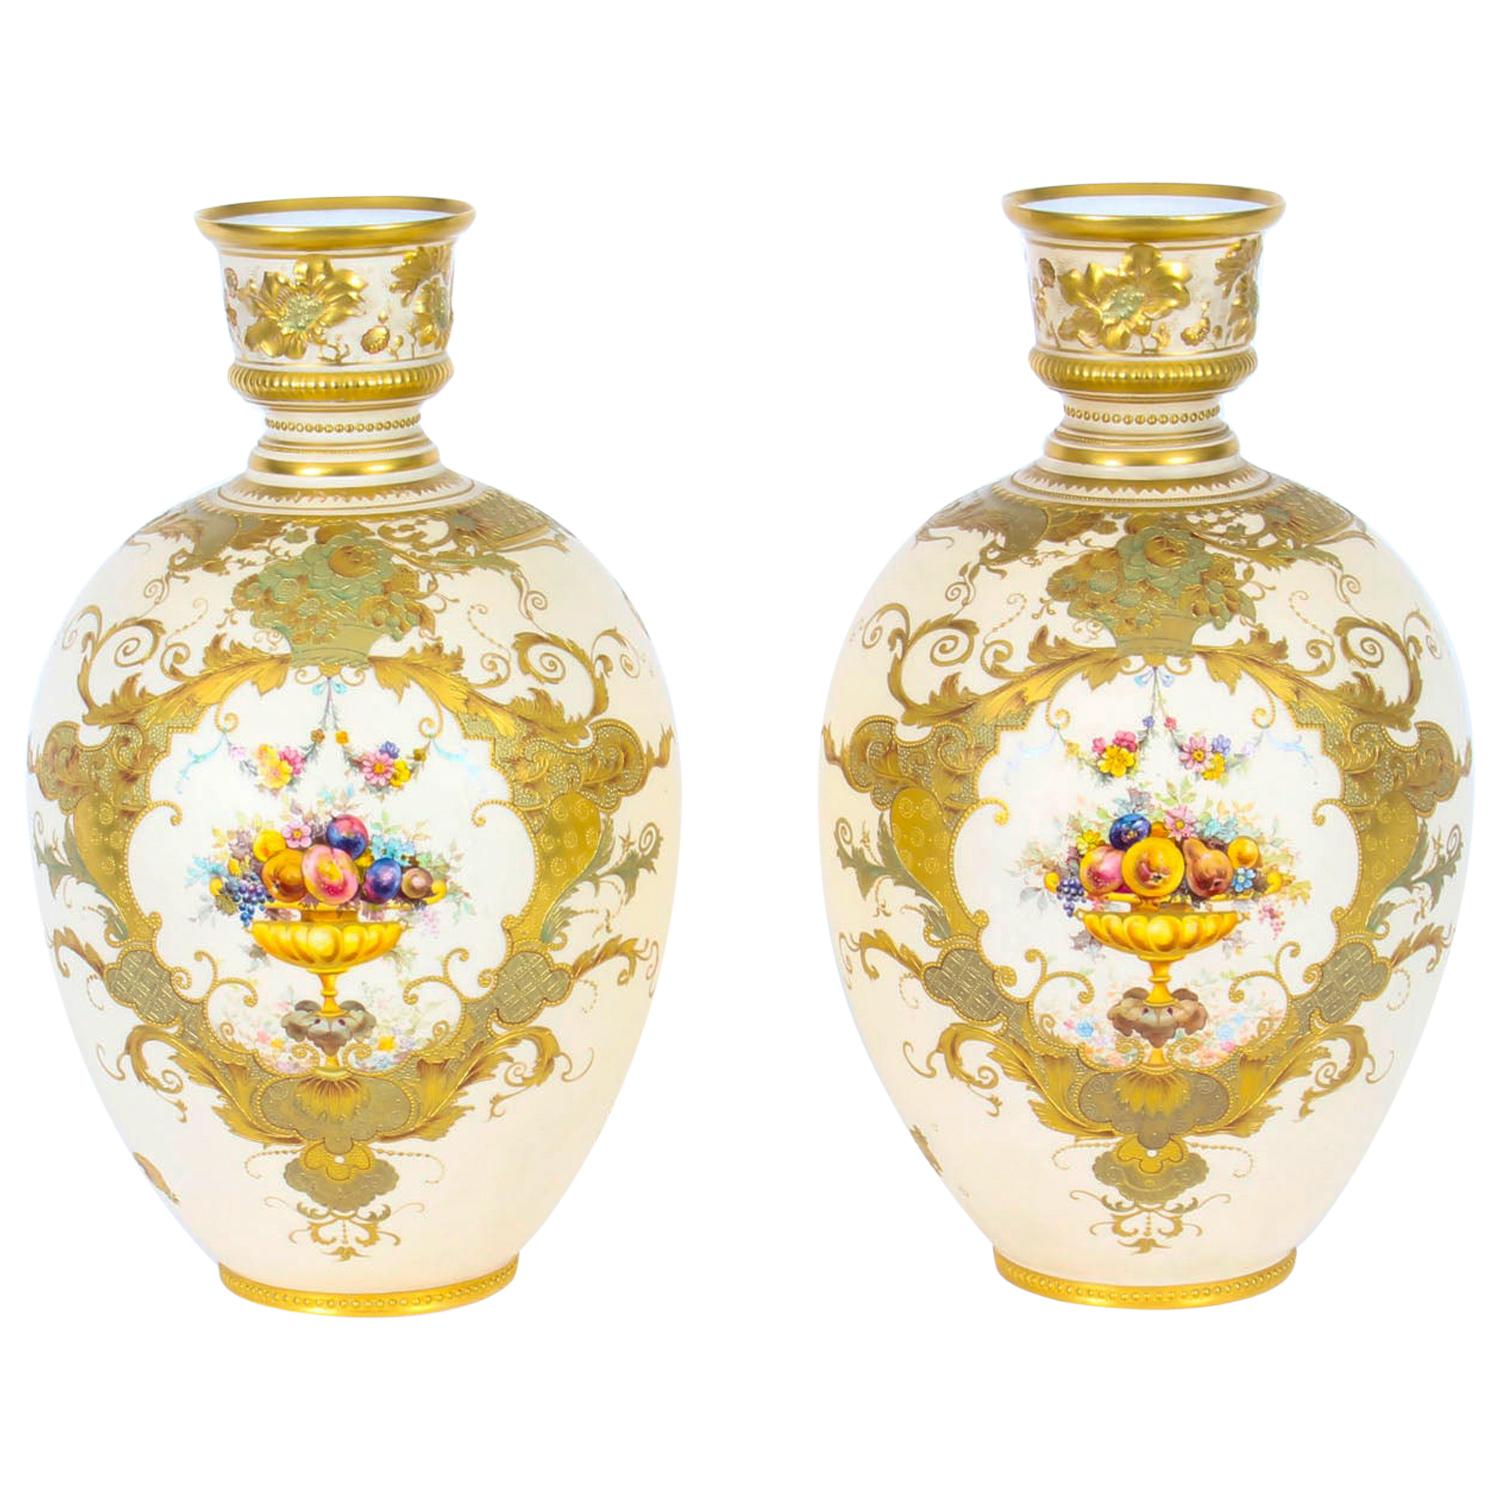 Antique Pair of Royal Crown Derby Blushed Porcelain Vases, 19th Century